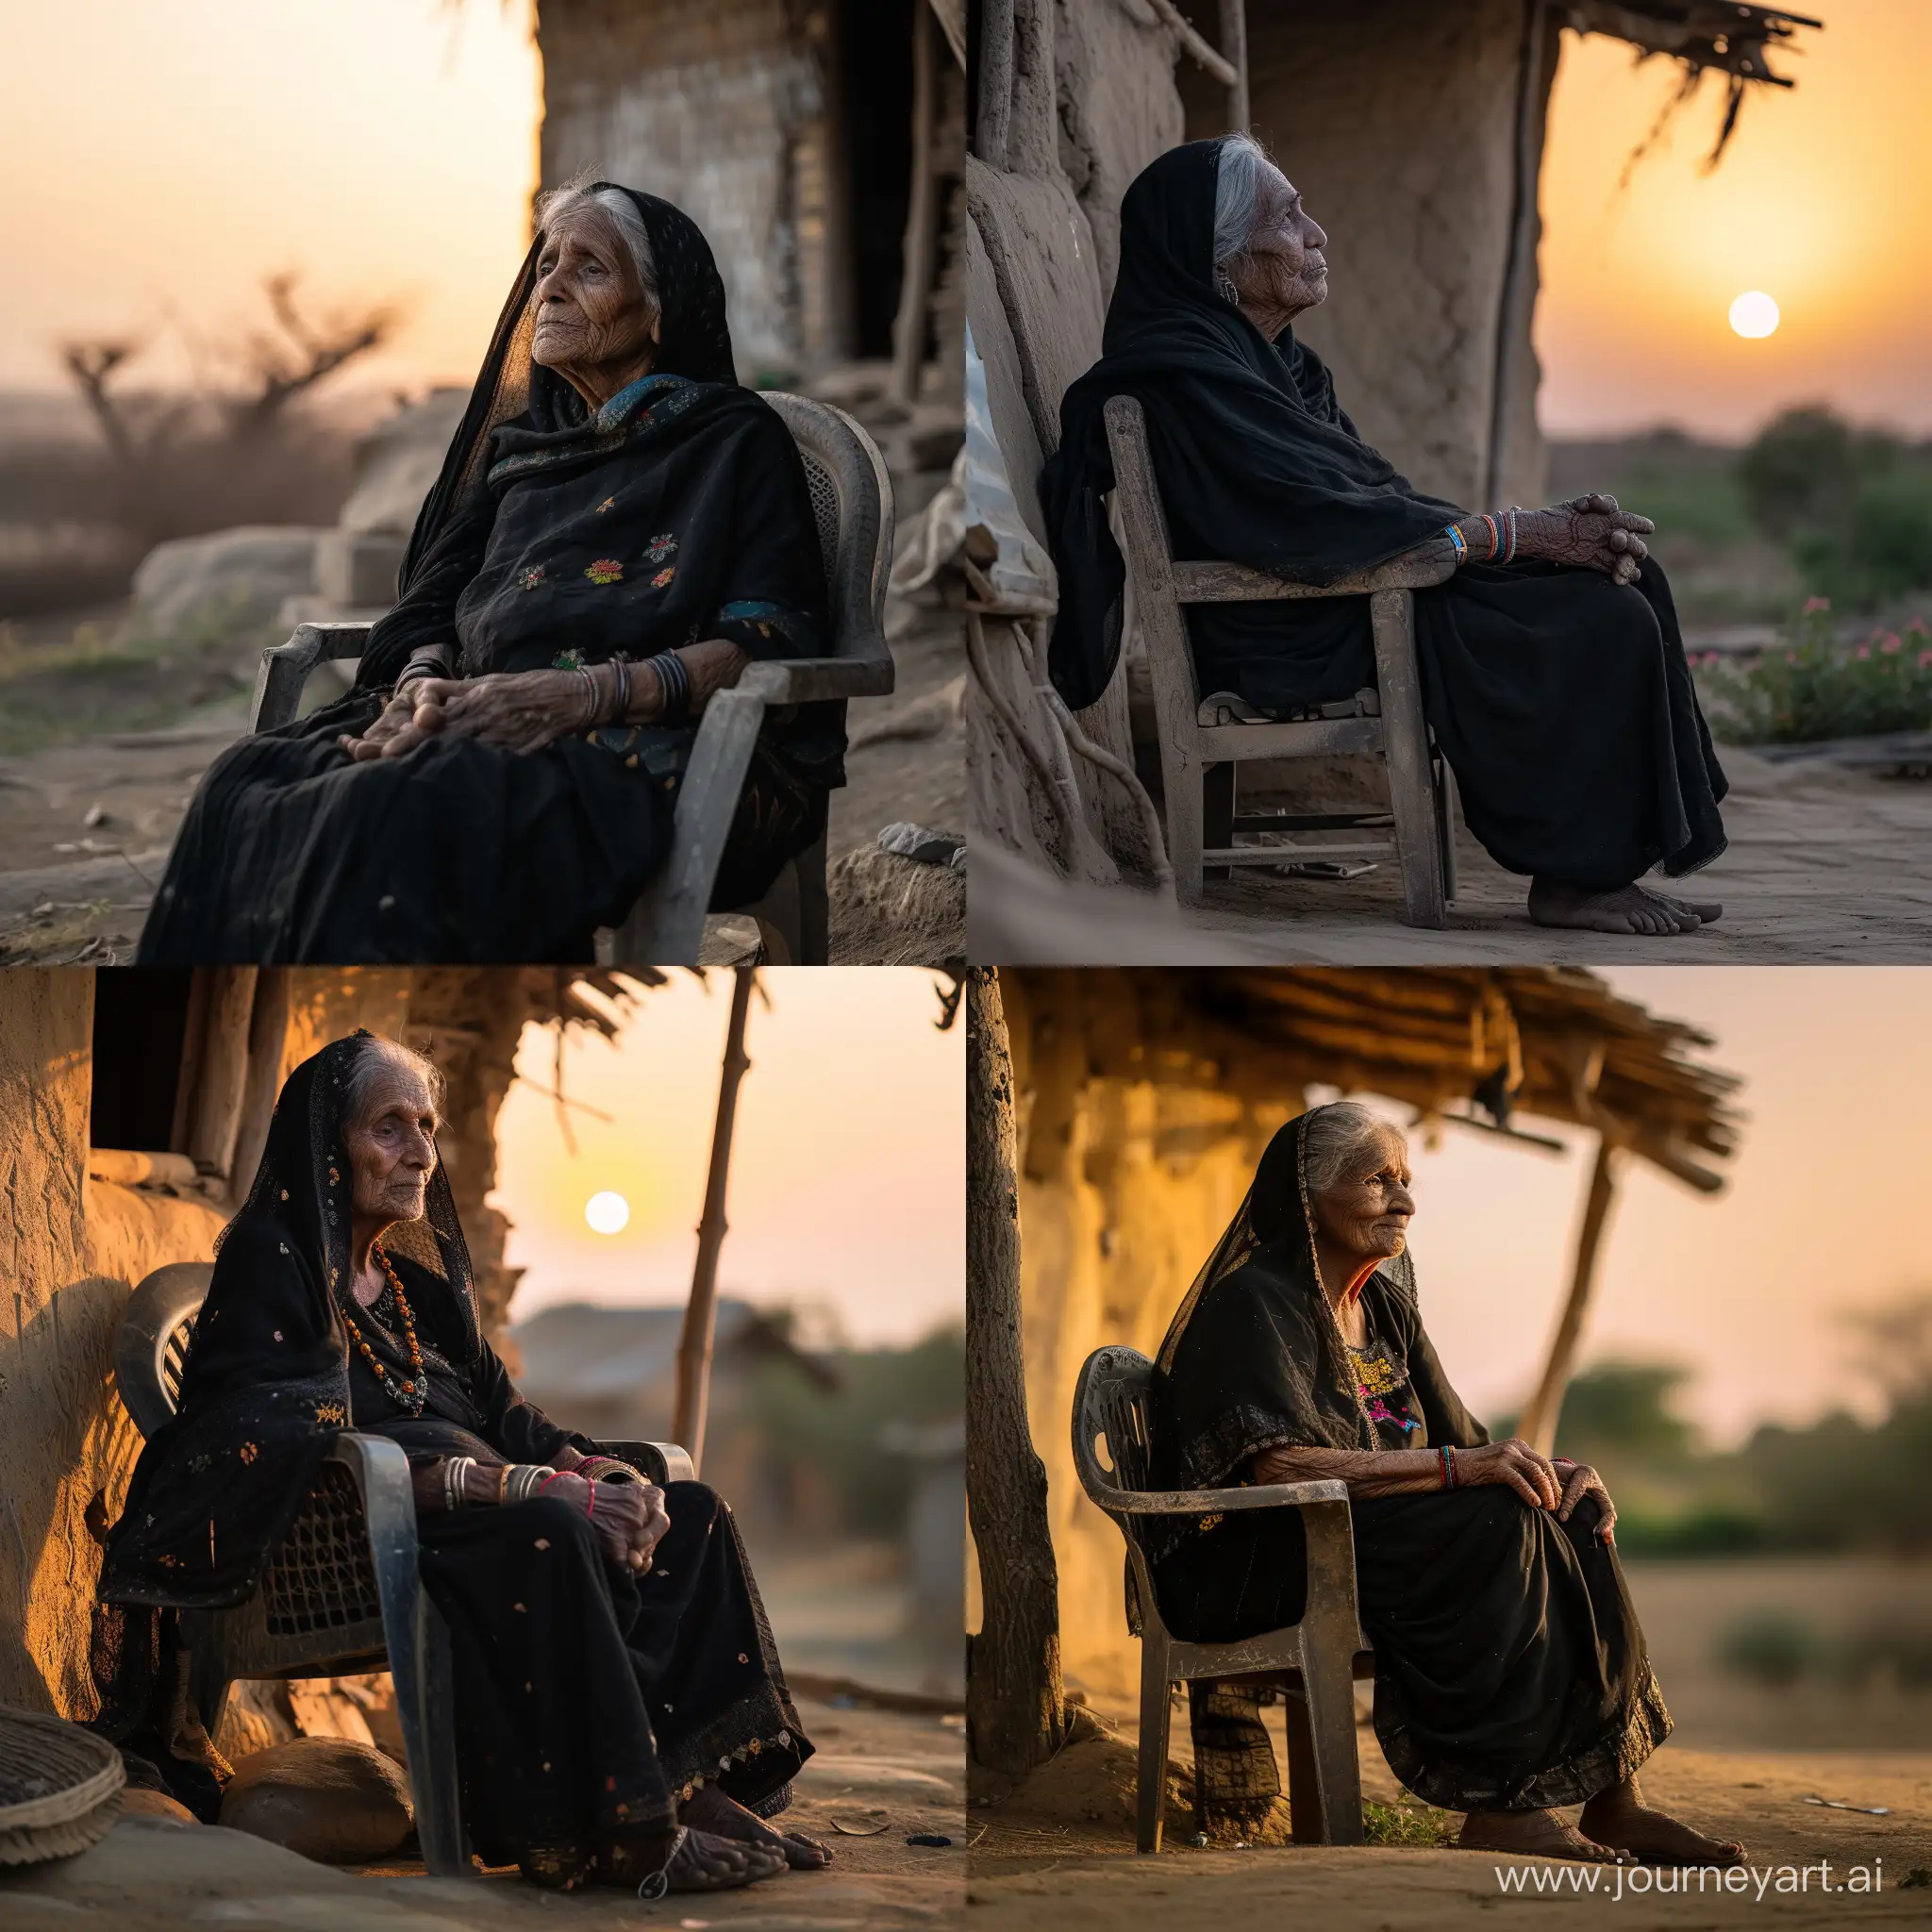 Serene-Sunset-Portrait-80YearOld-Rabari-Woman-in-Traditional-Black-Clothing